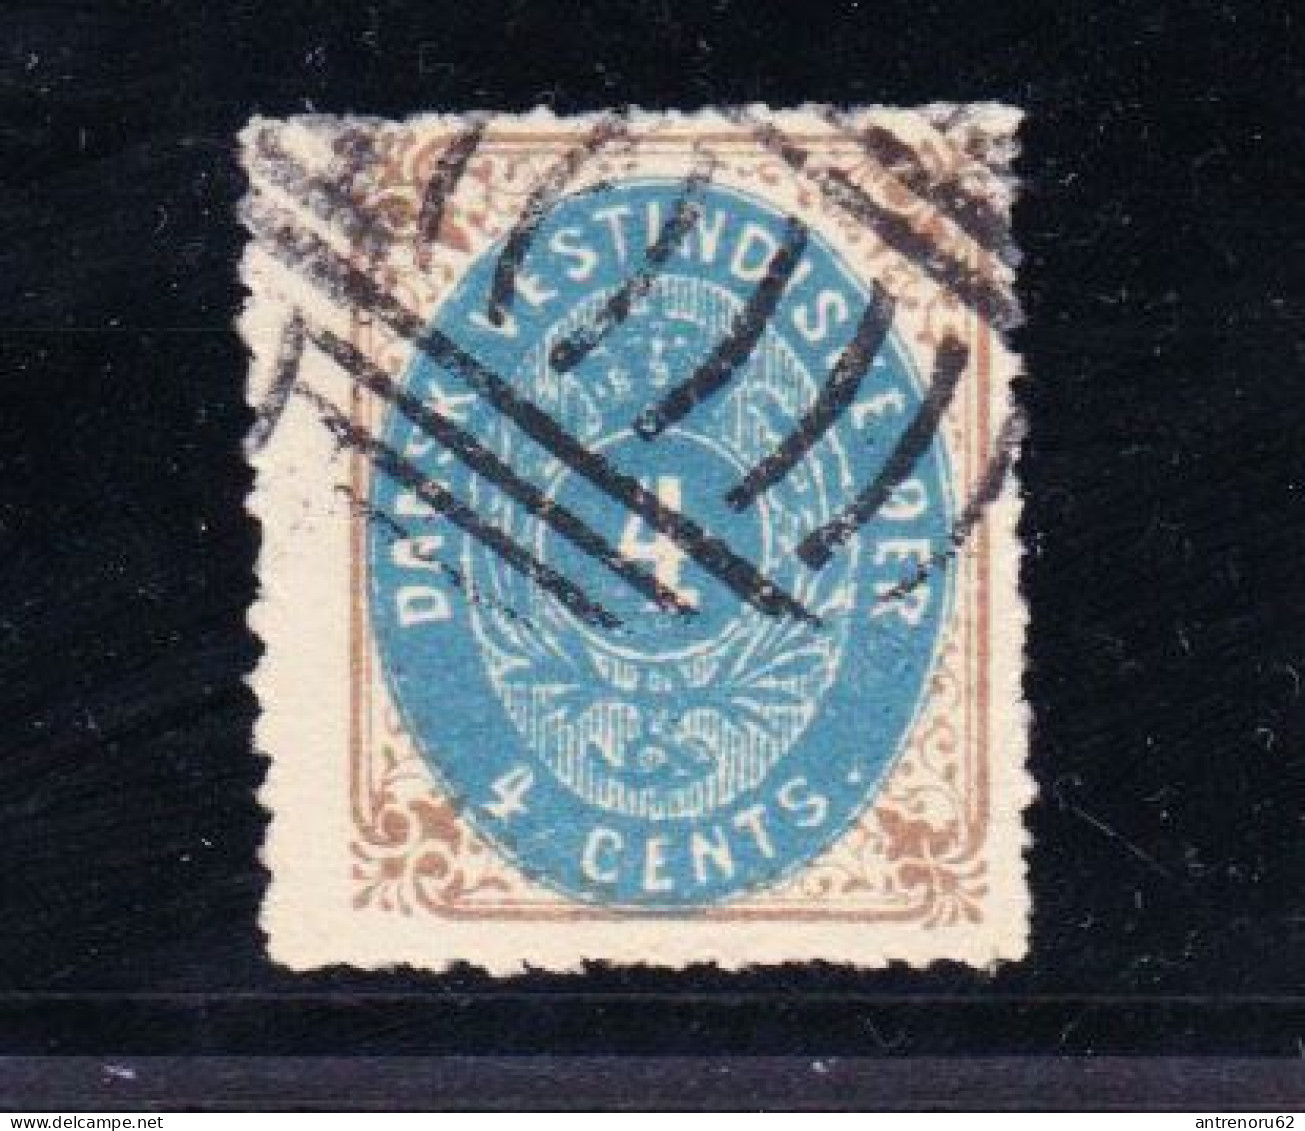 STAMPS-DENMARK-WEST-INDIES-1873-USED-SEE-SCAN - Danemark (Antilles)